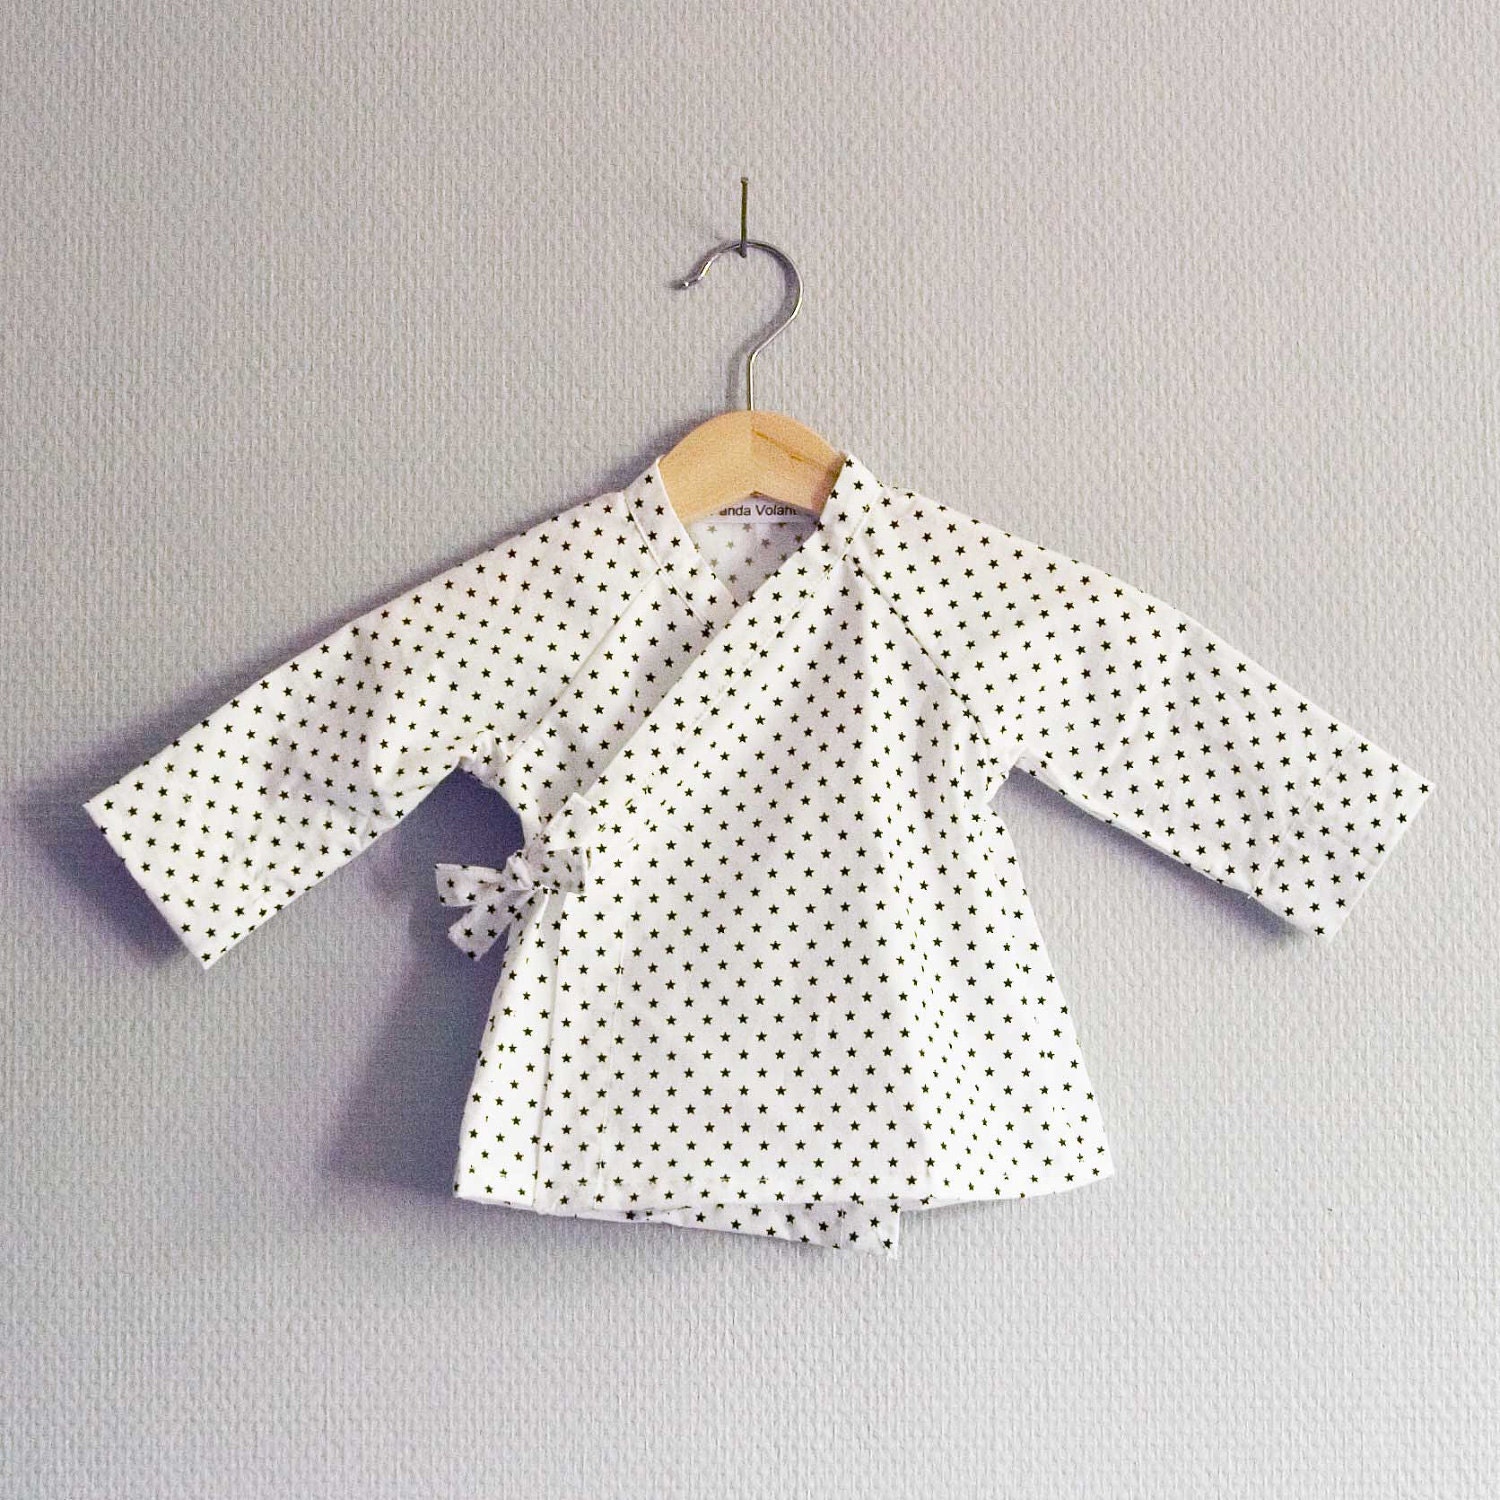 Kimono bb cachecoeur tunique haut tshirt noir et blanc enfant imprim petites toiles minimaliste mignon simple joli